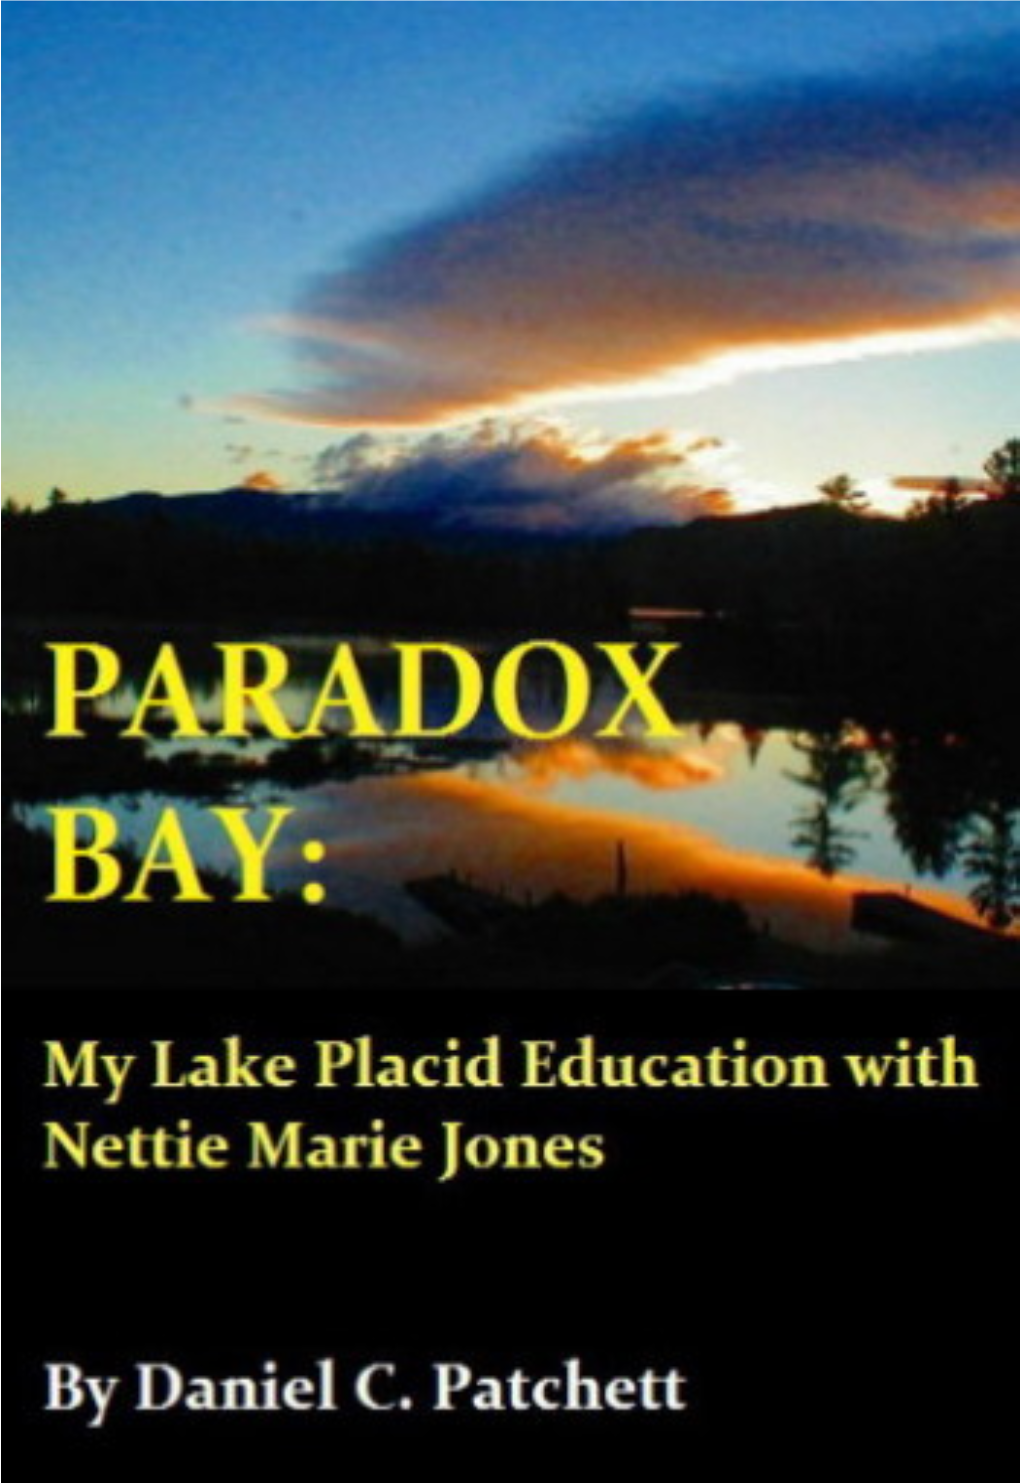 PARADOX BAY: My Lake Placid Education with Nettie Marie Jones